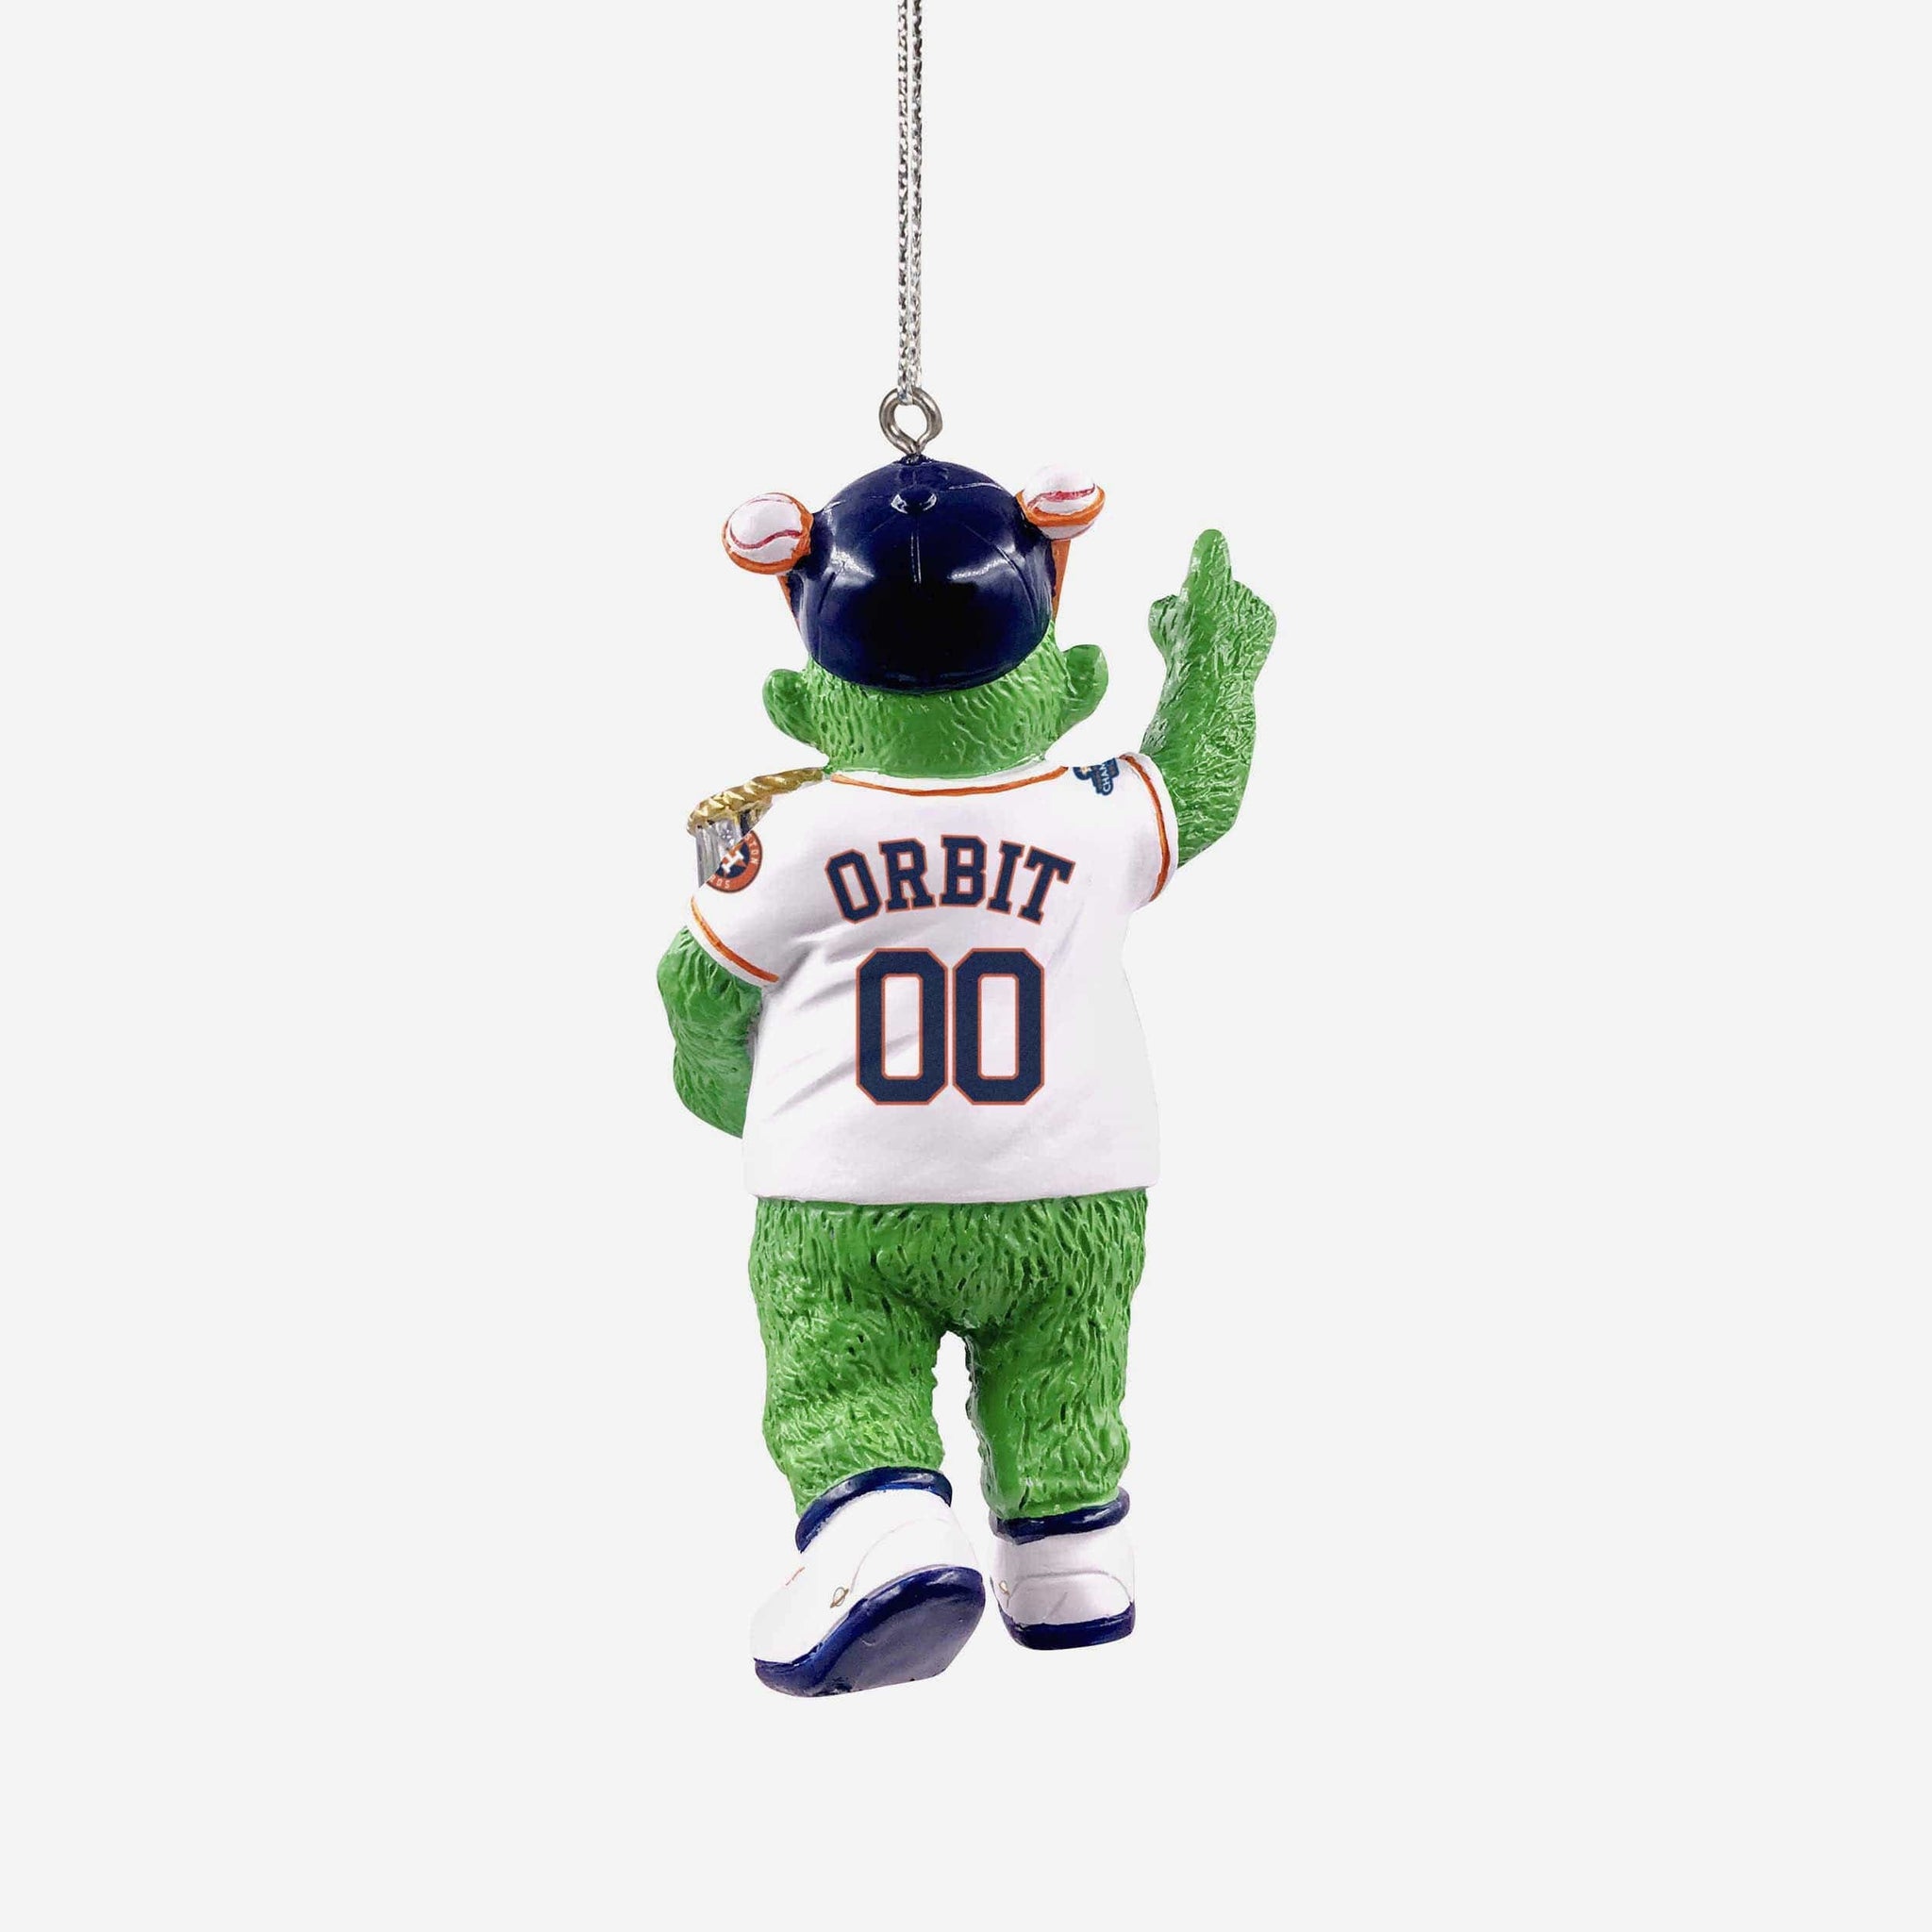 Official Play Ball Houston Astros 2022 World Series Orbit Mascot